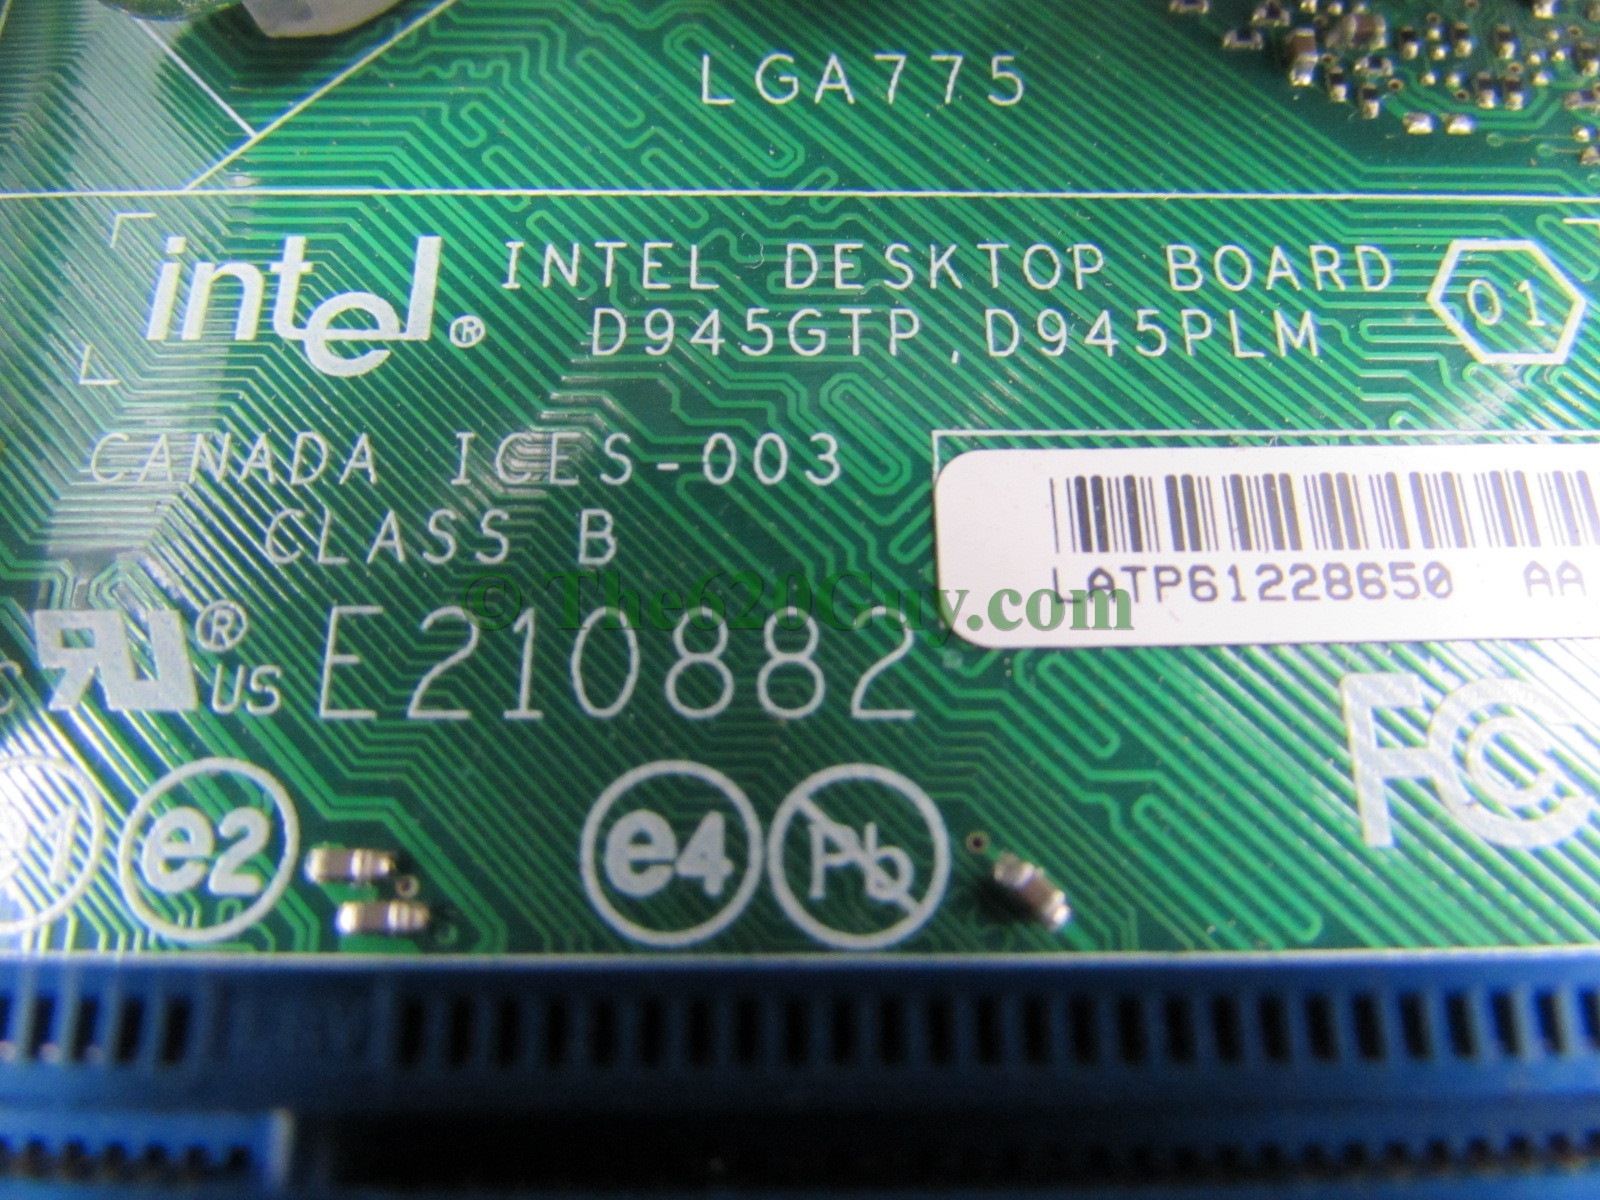 intel desktop board d945gcpe